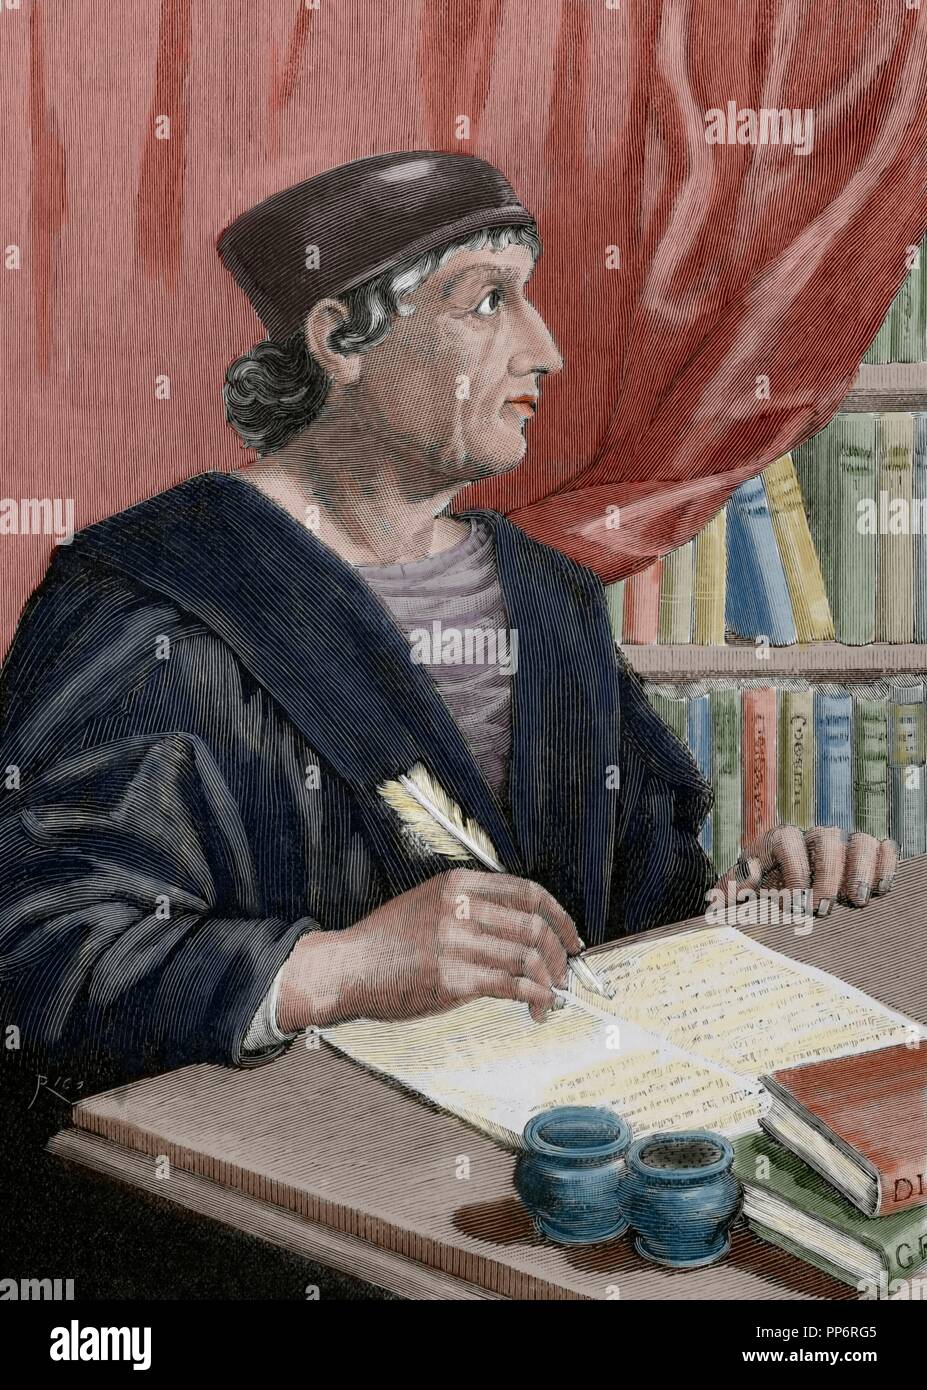 Antonio Nebrija (1441-1522). Spanish scholar, historian, teacher and poet. Writing a grammar of the Castilian language. Engraving. Colored. Stock Photo